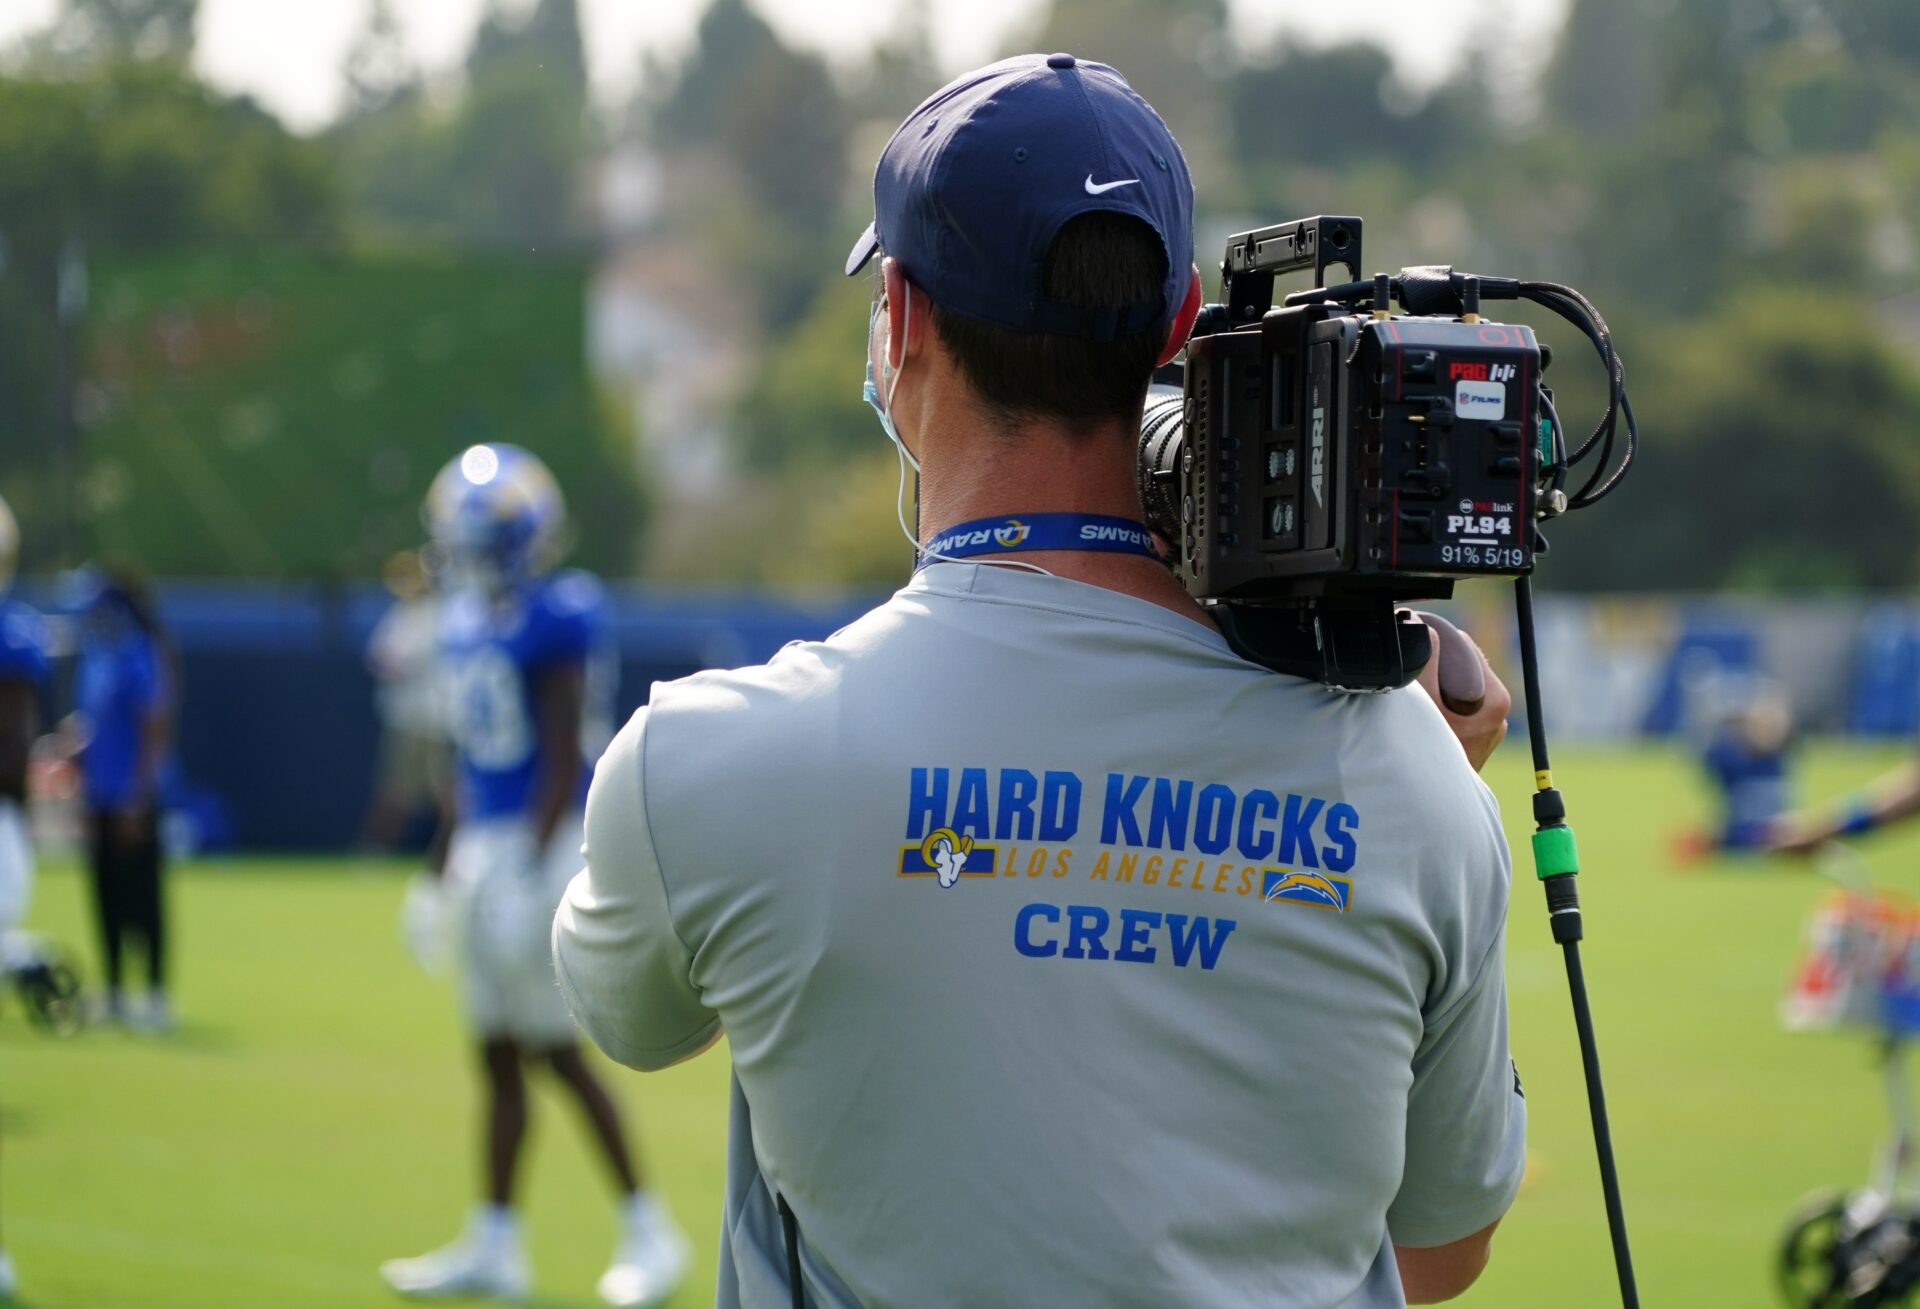 A Hard Knocks crew cameraman shoots footage at the Los Angeles Rams training camp.